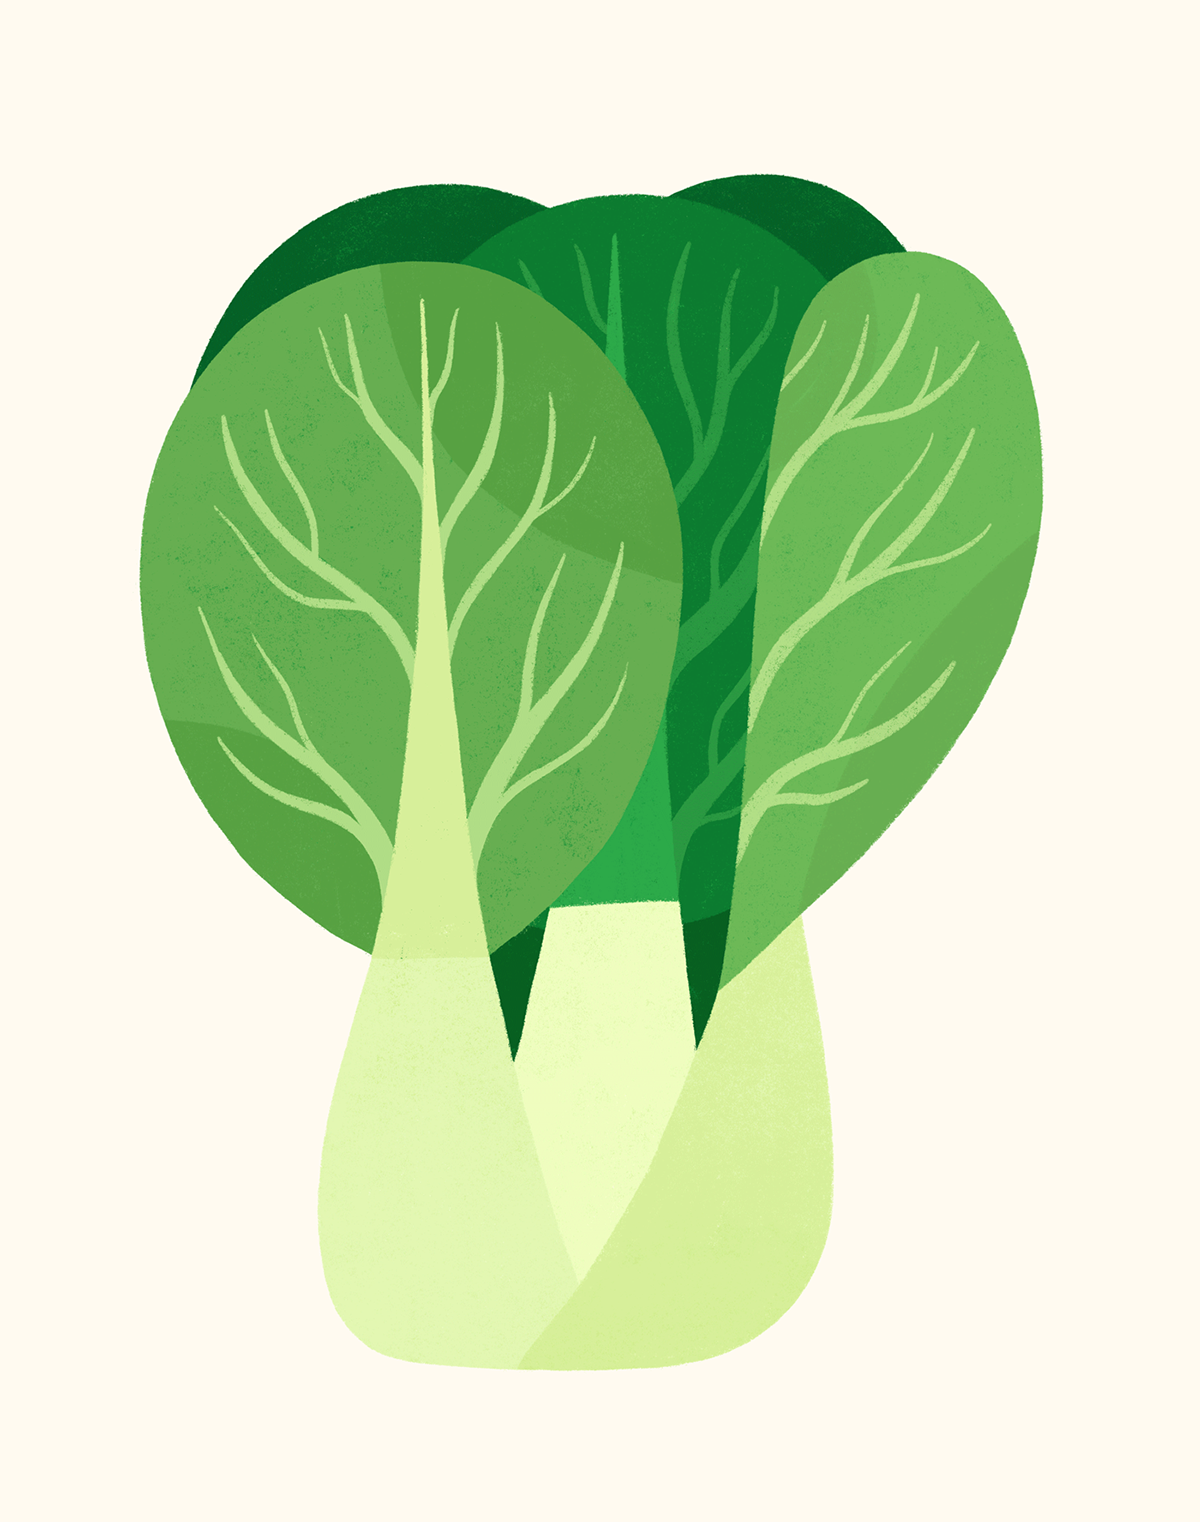 vegetables veggies fresh Greens editorial stylized bok choy butternut squash illustrated food turnip